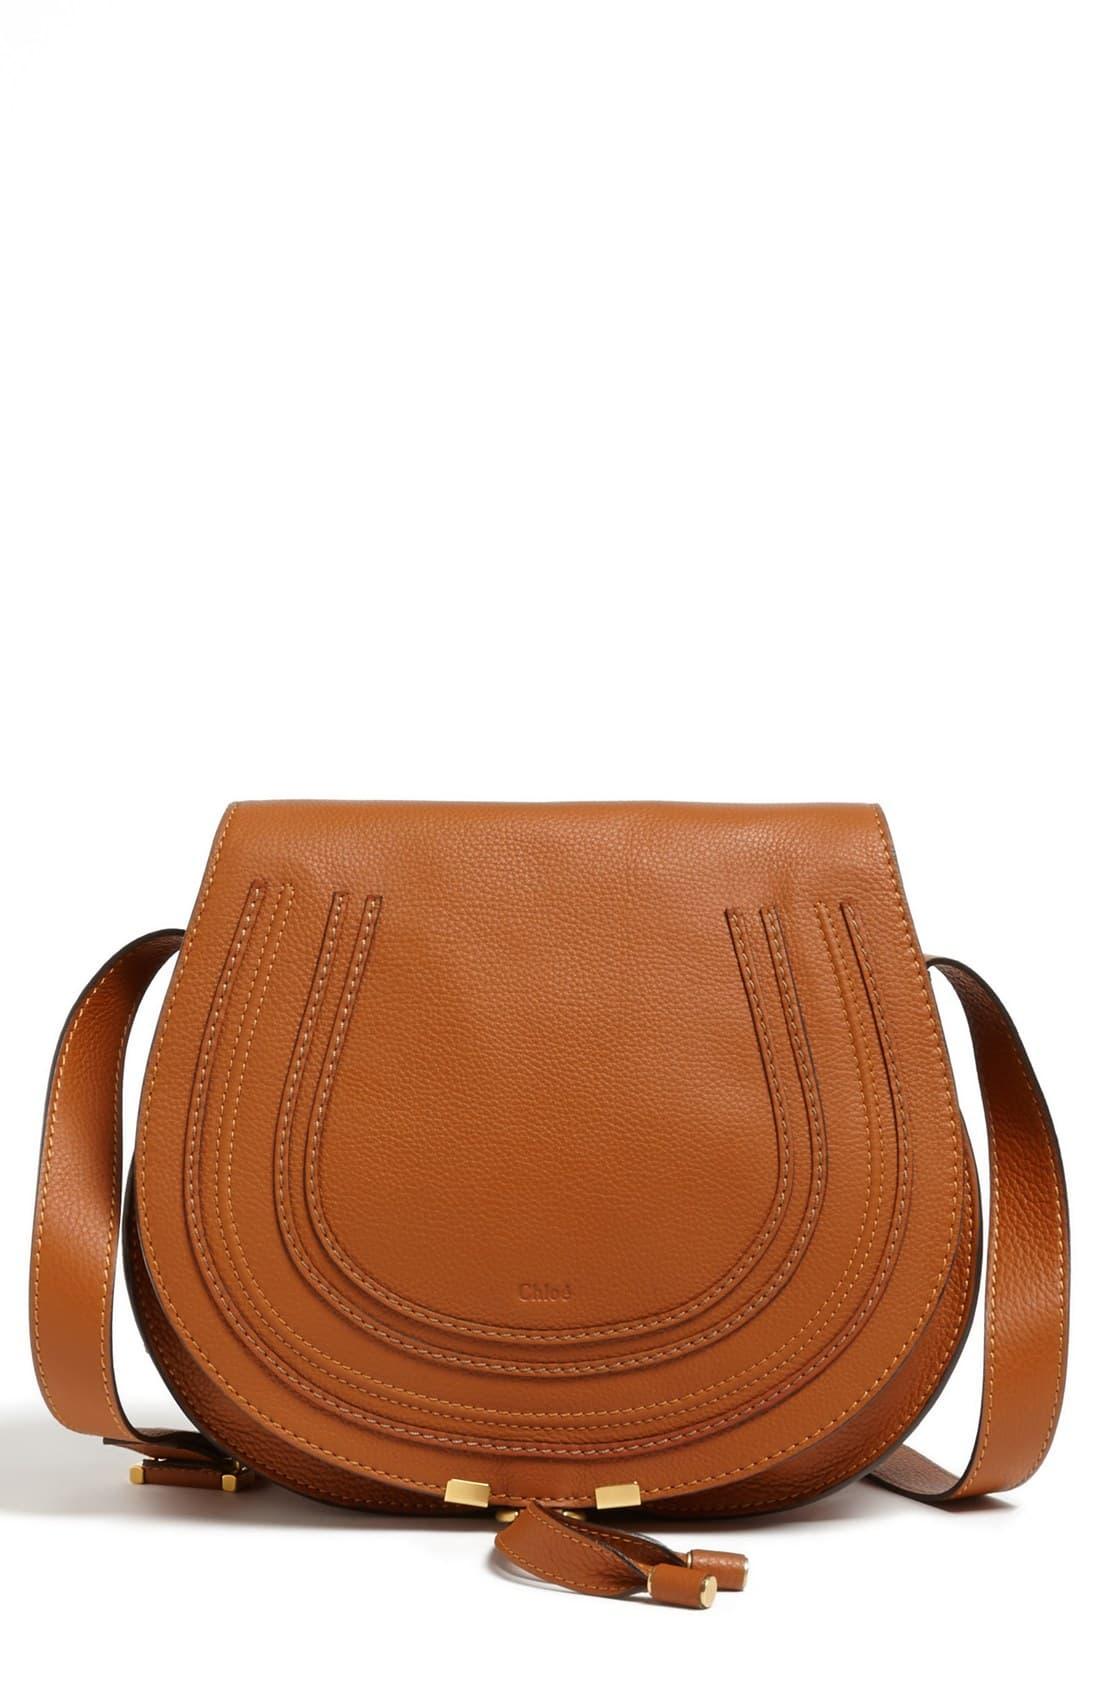 Chloé Medium Marcie Leather Saddle Bag In Tan Brown Lyst